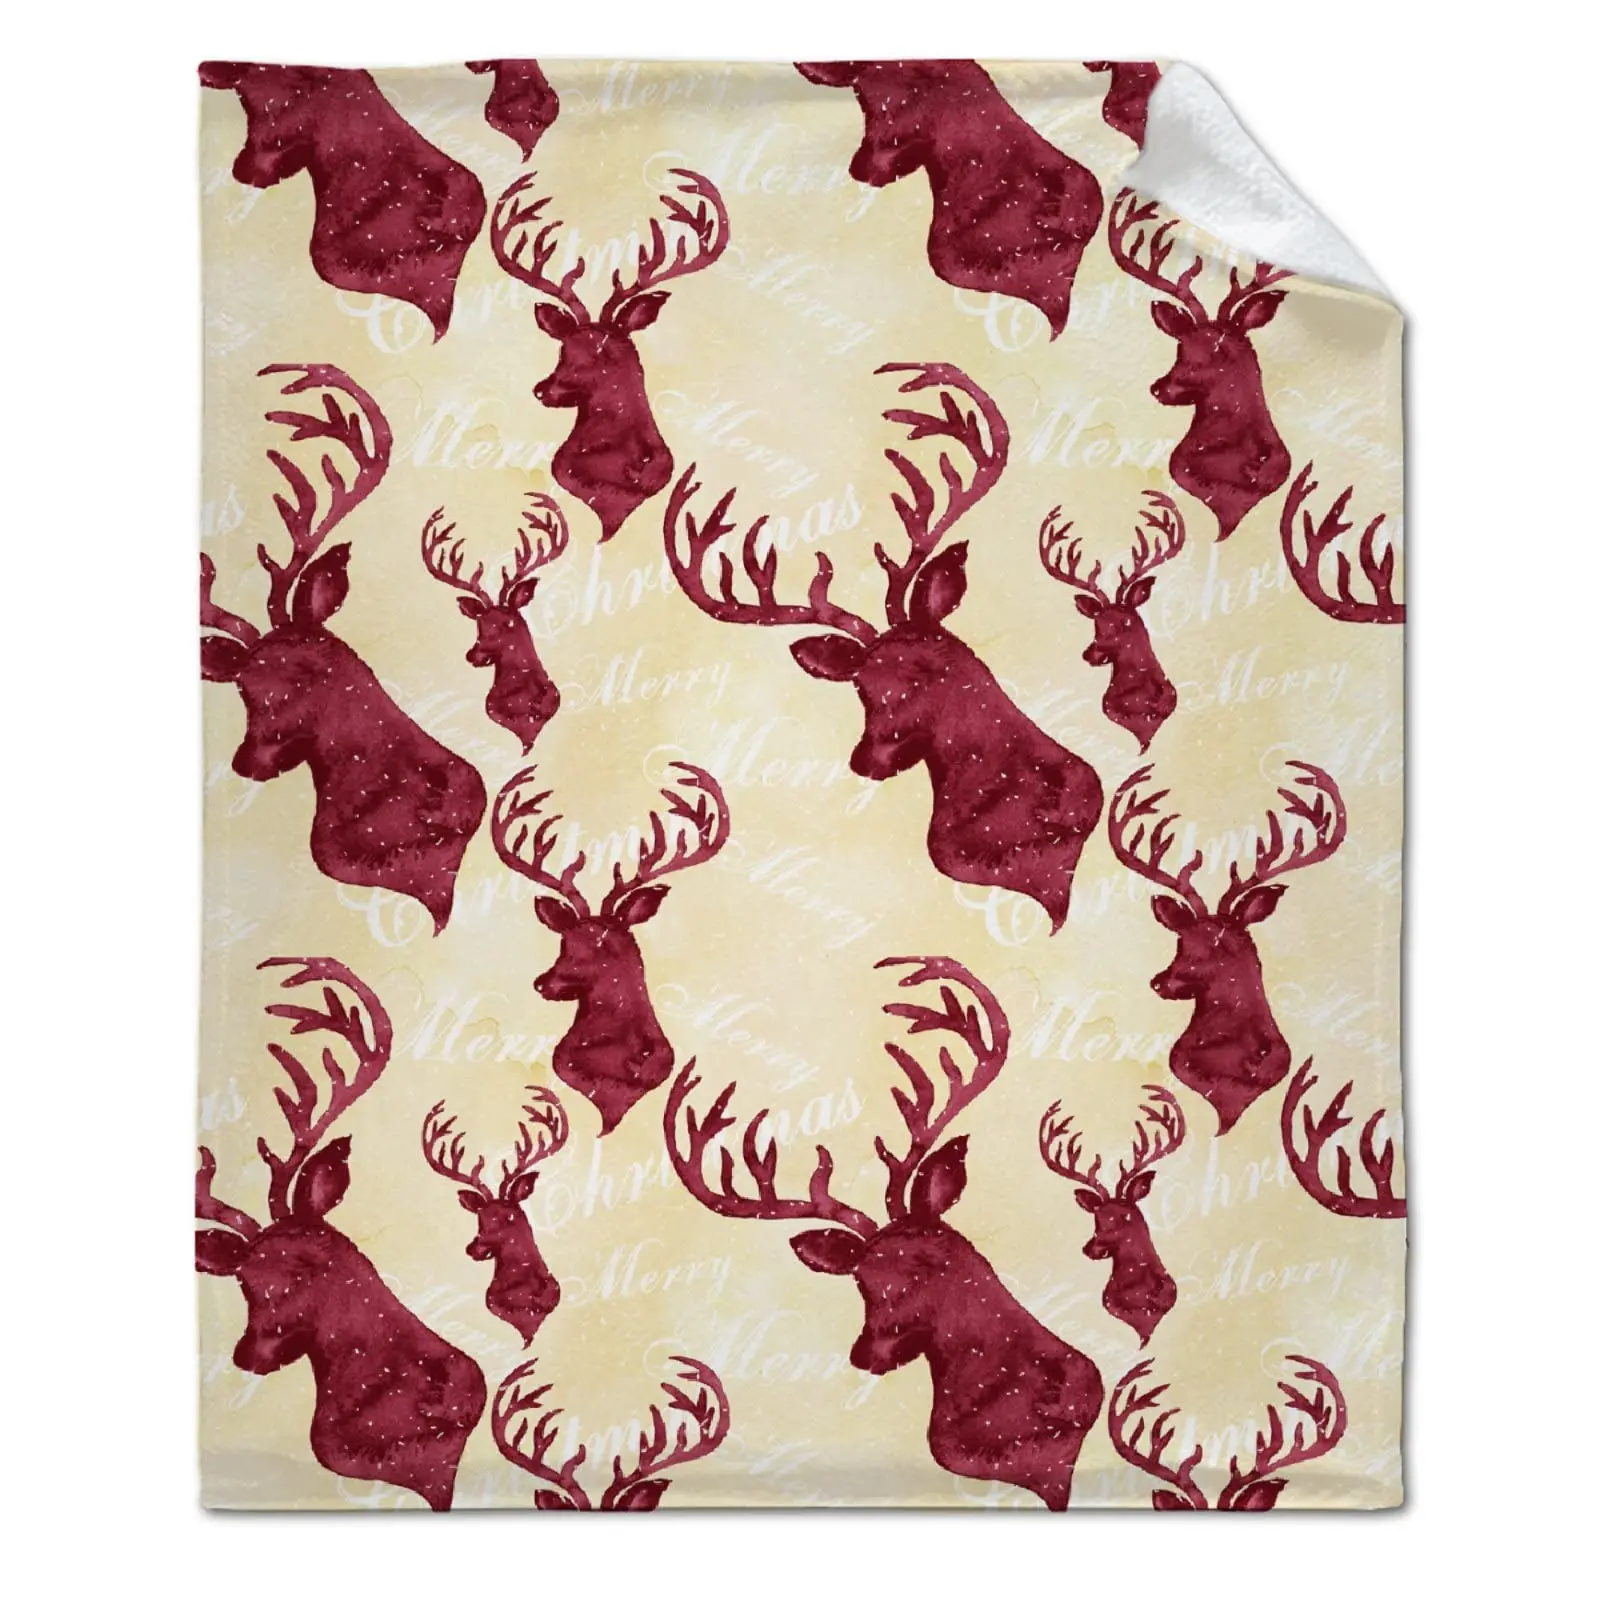 Christmas Reindeer Snowflakes Blanket Fleece Plush Throw Blankets Soft Cozy Warm Bedspread Shawl Bed Sofa Flannel Print Blanket